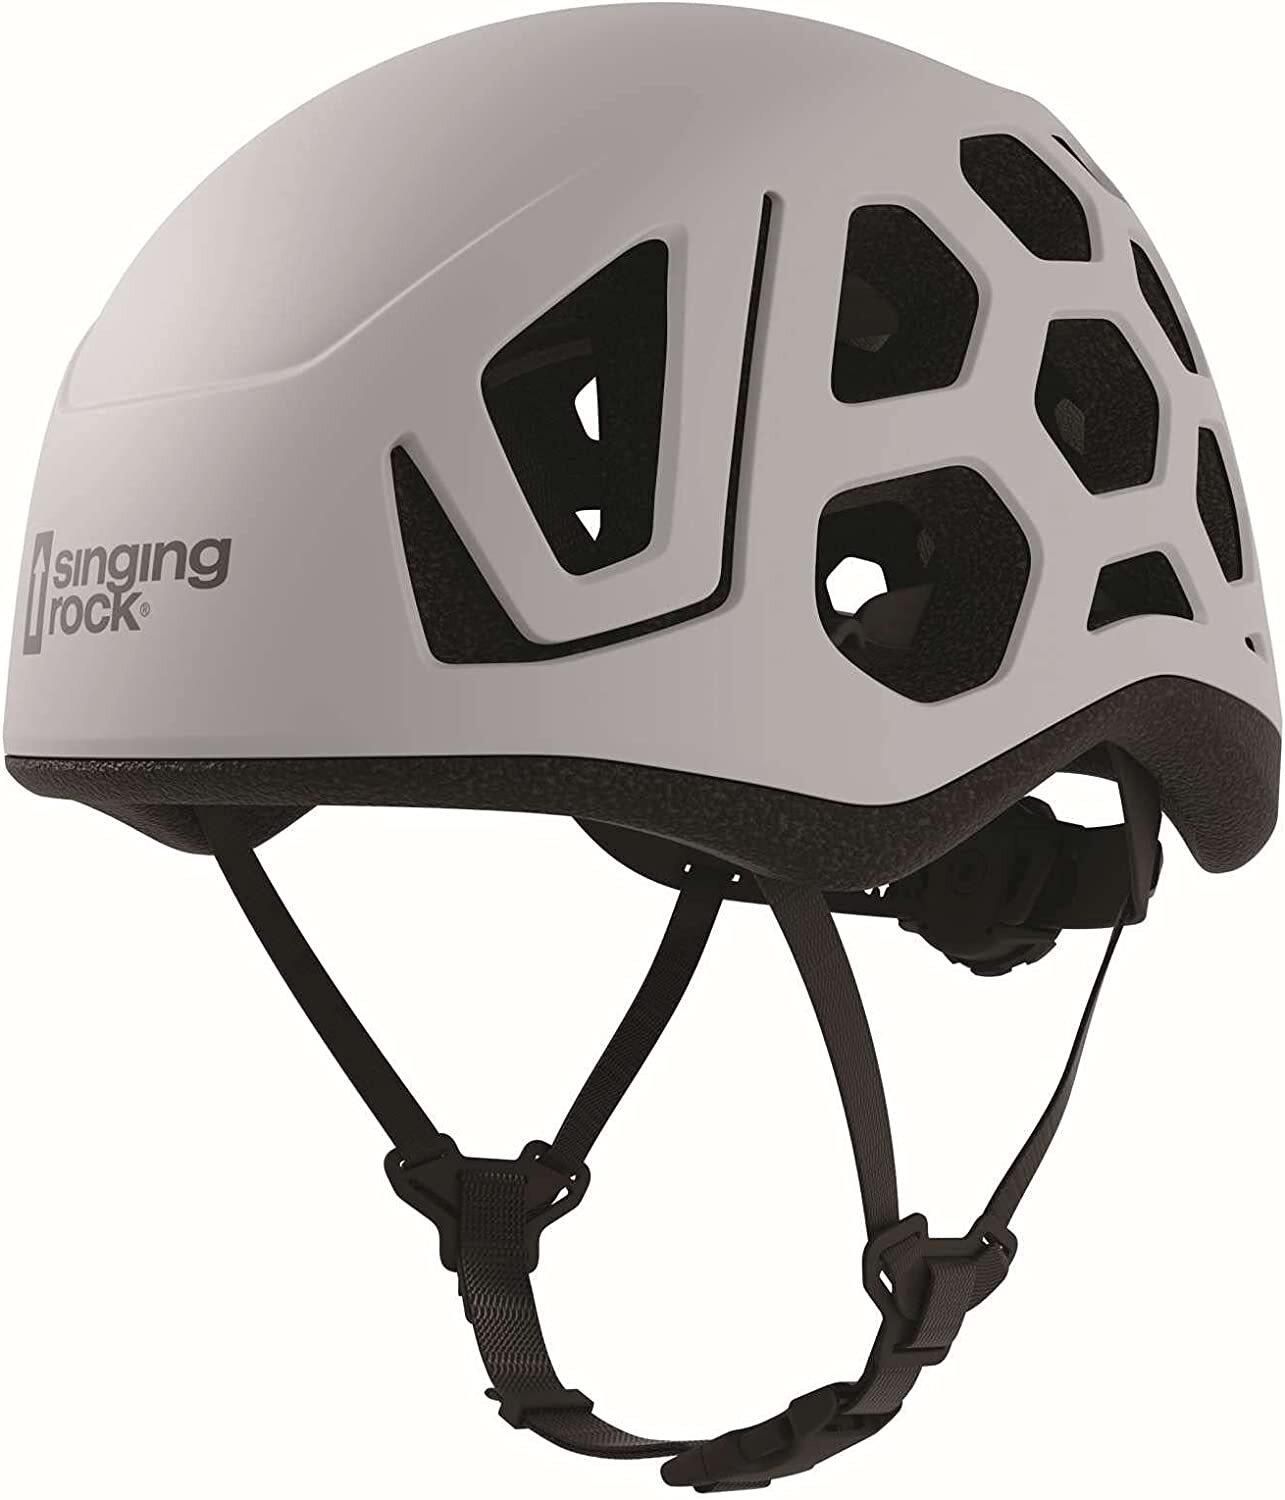 Singing Rock Hex Climbing Helmet, Large (55-61Cm), Ice White